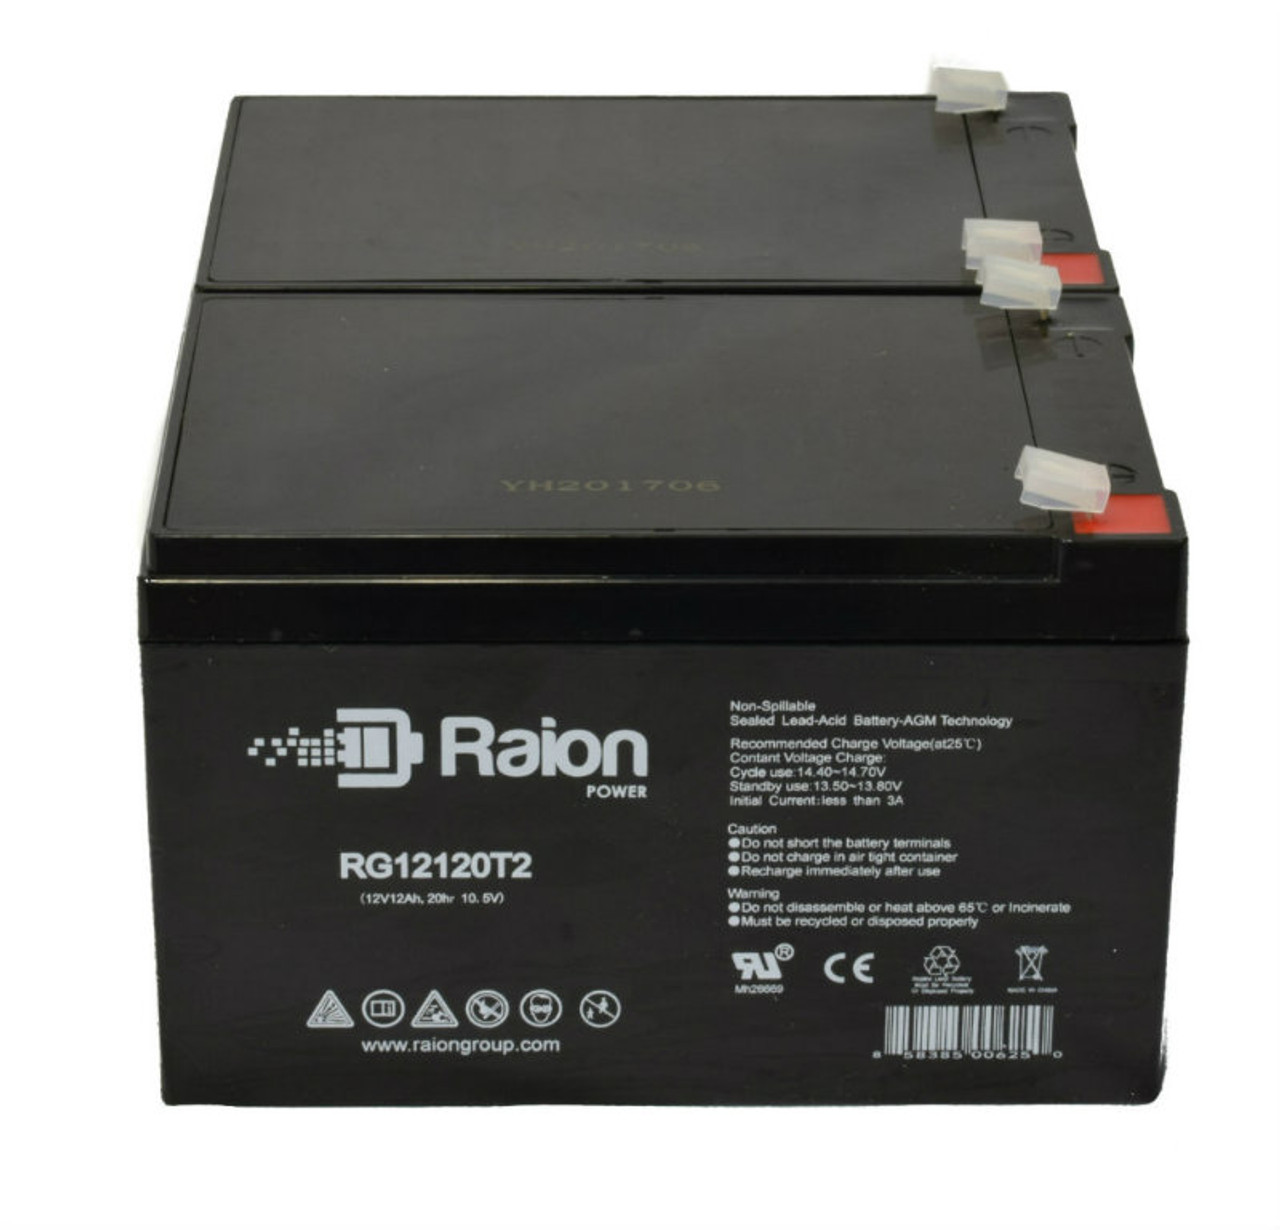 Raion Power RG12120T2 Replacement Emergency Light Battery for Emergi-Lite 0SB - 2 Pack